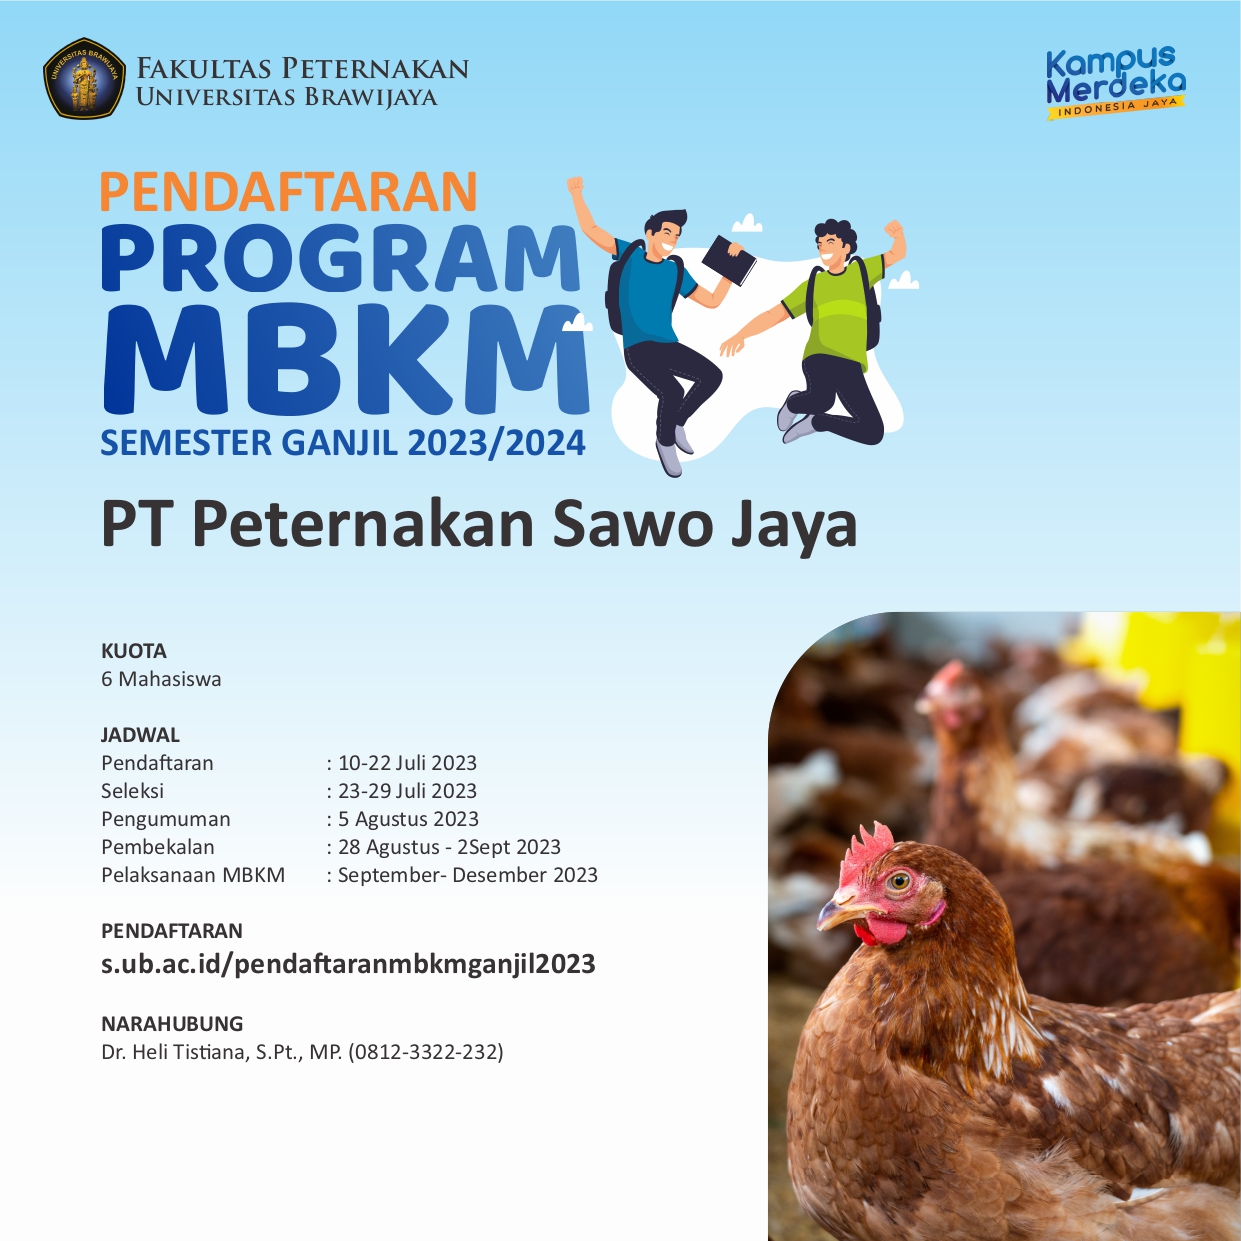 Registration of MBKM PT Peternakan Sawo jaya